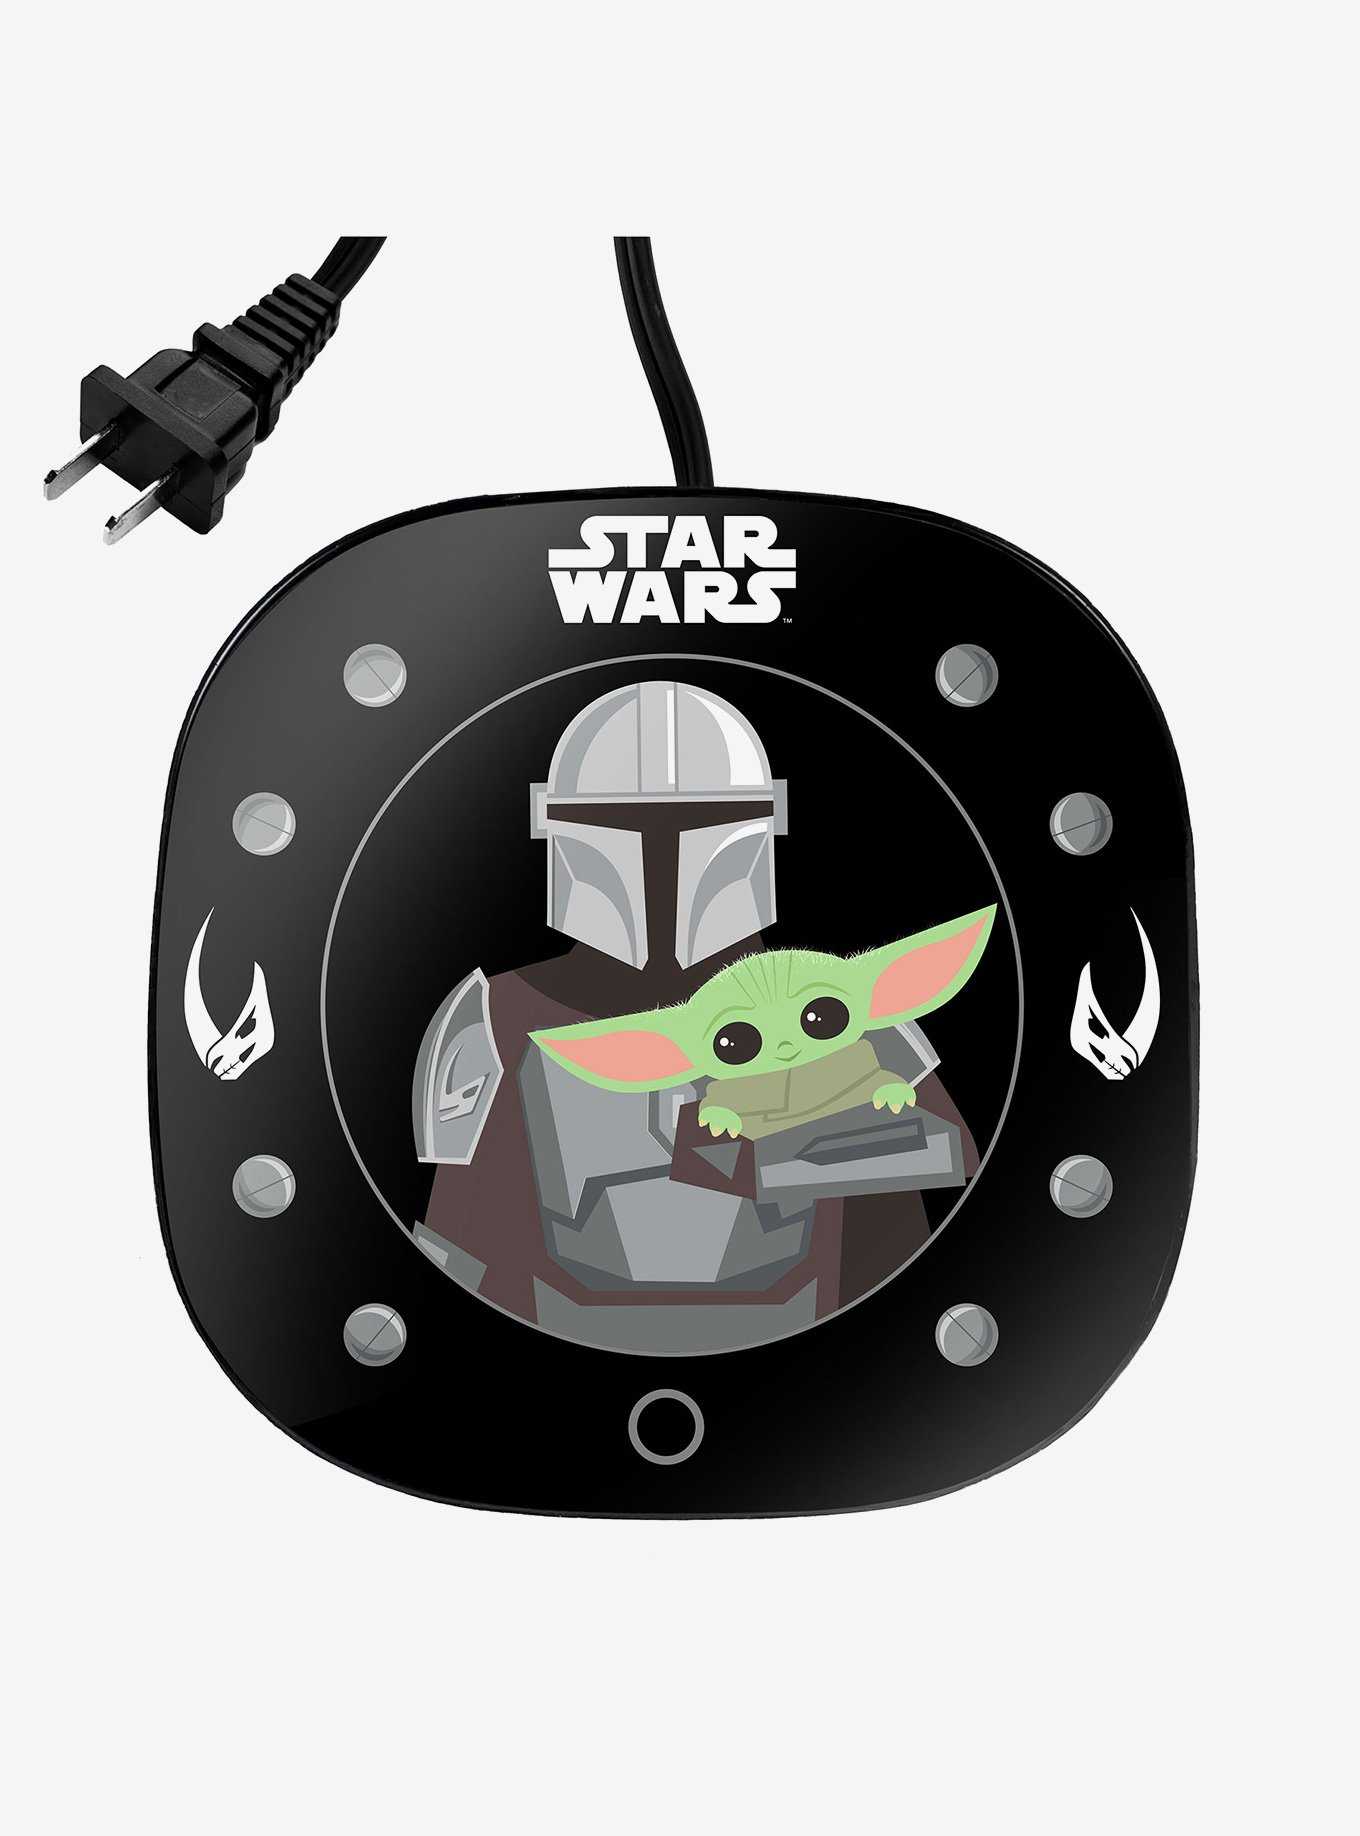 Star Wars The Mandalorian Uncanny Brands Mug Warmer with Baby Yoda Molded Mug Auto Shut On/Off, , hi-res